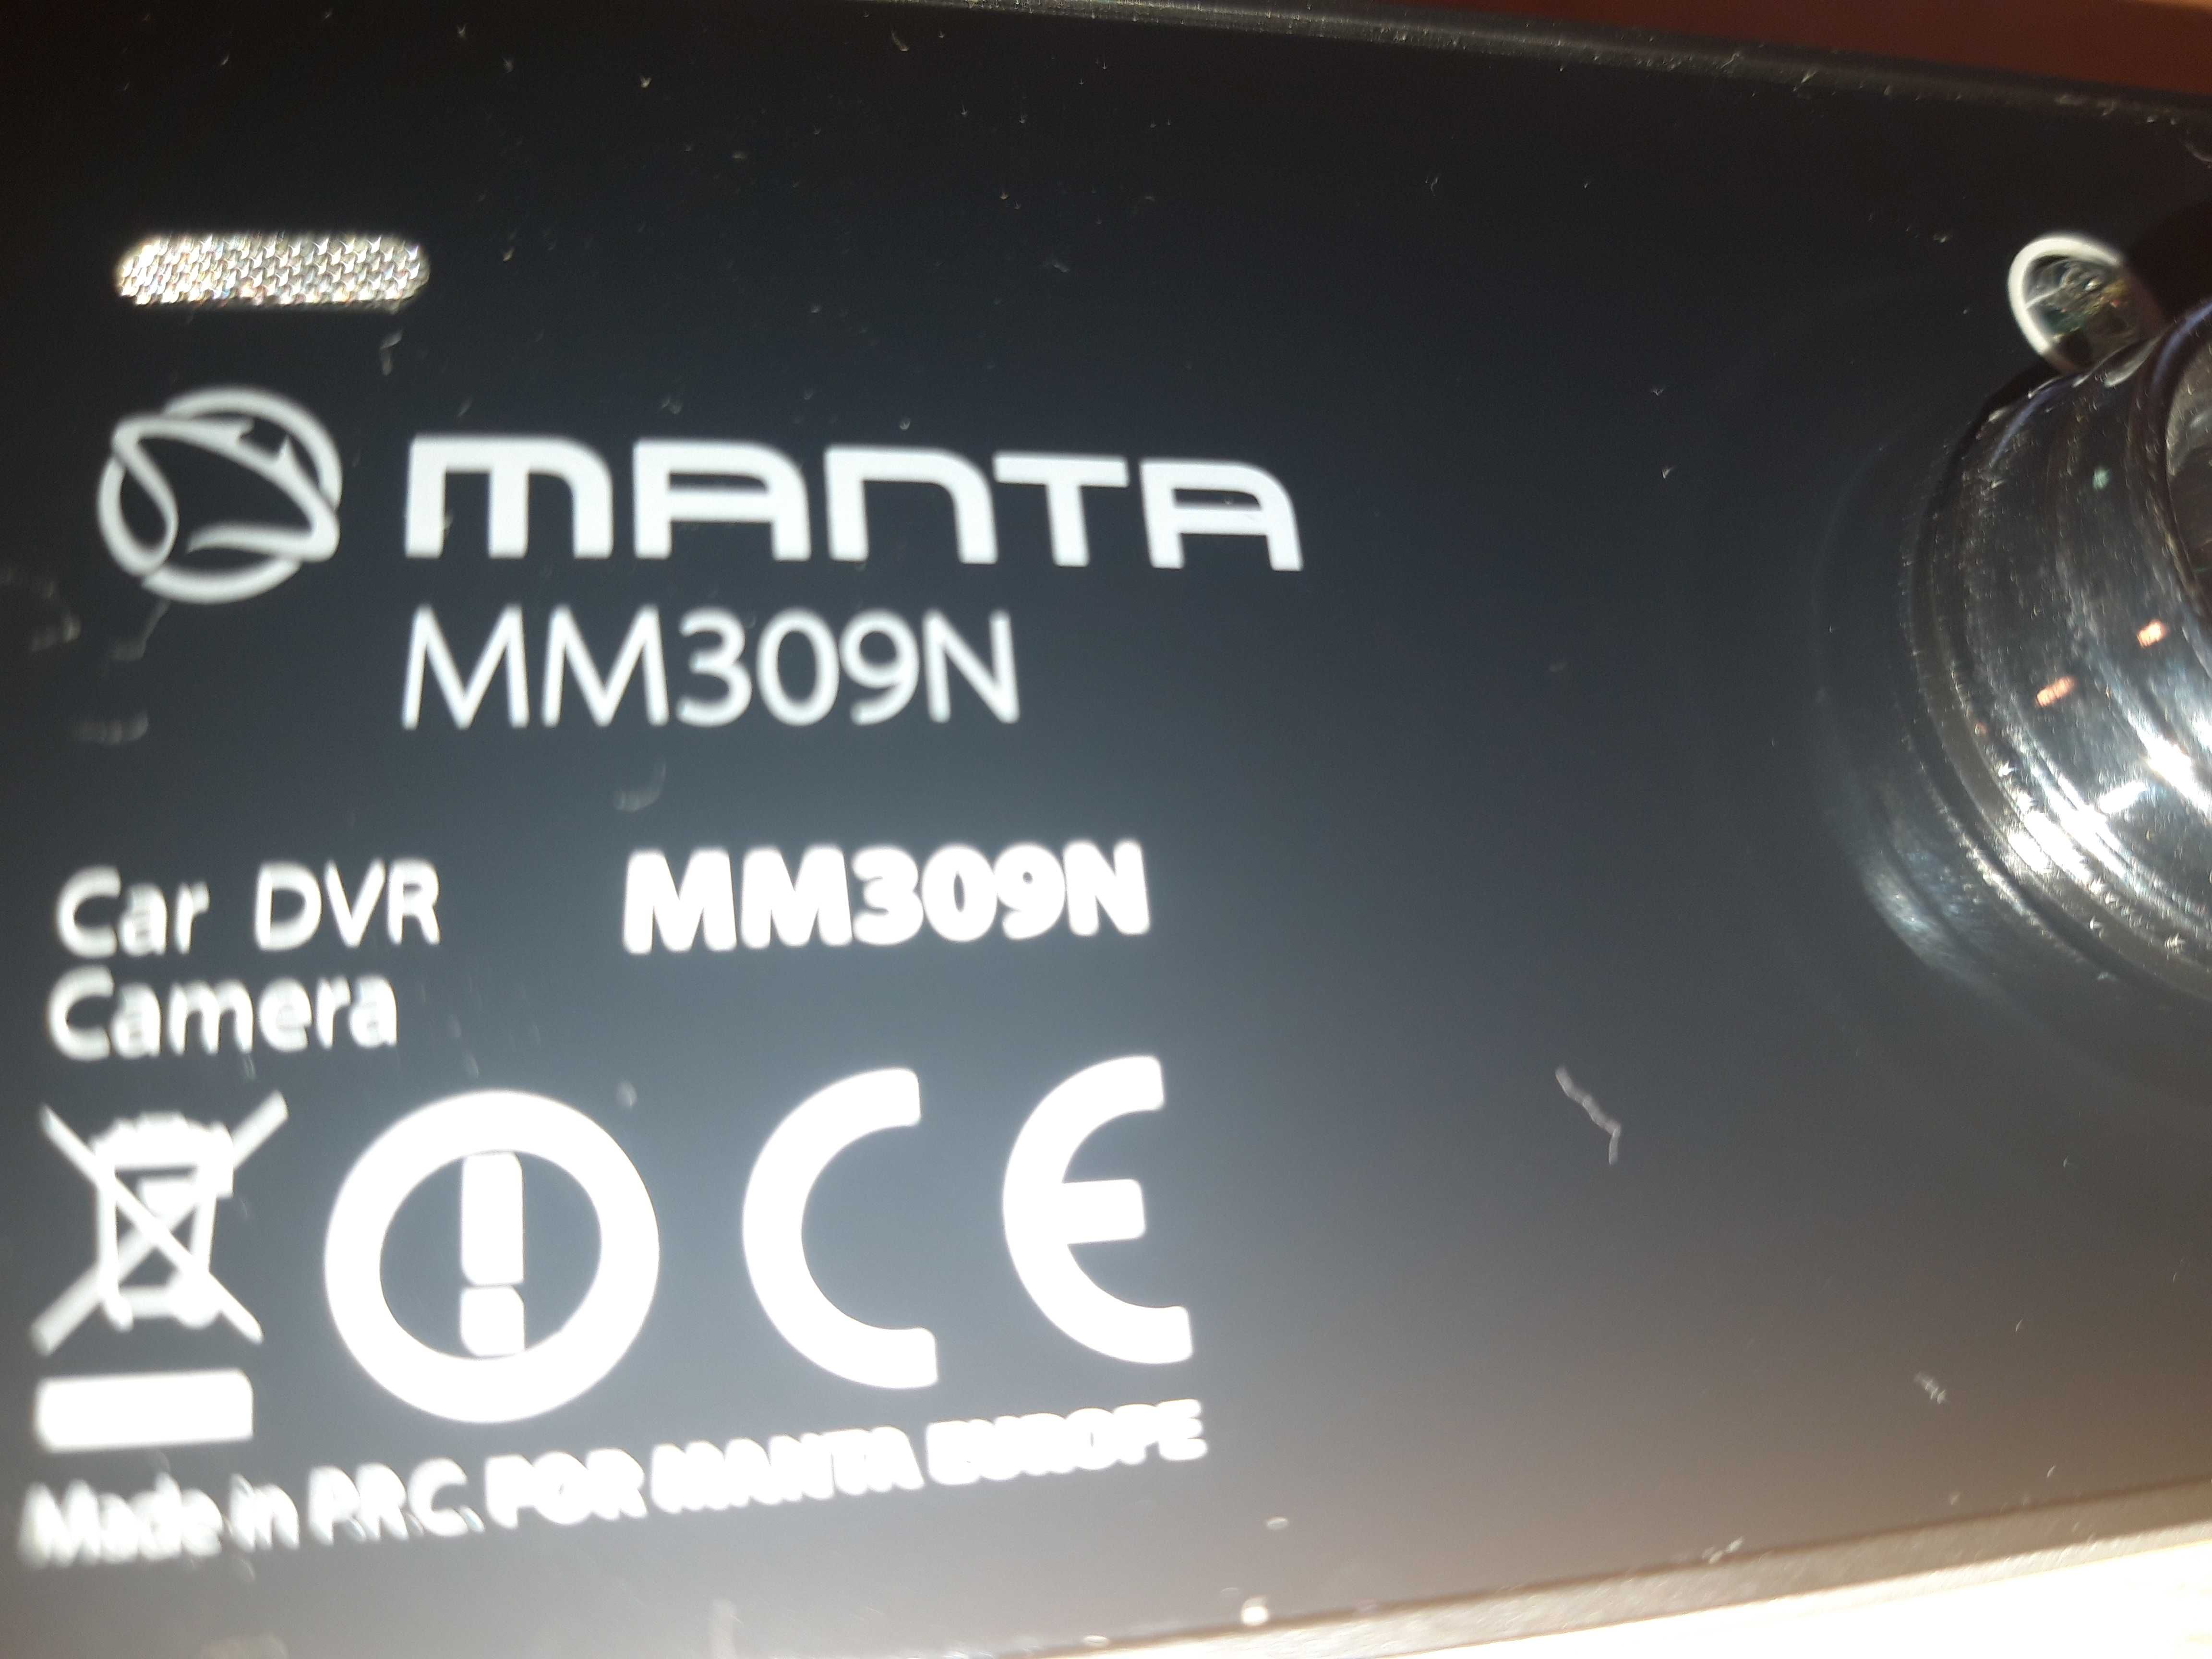 Kamerka samochodowa REJESTRATOR marki "Manta" MM309N